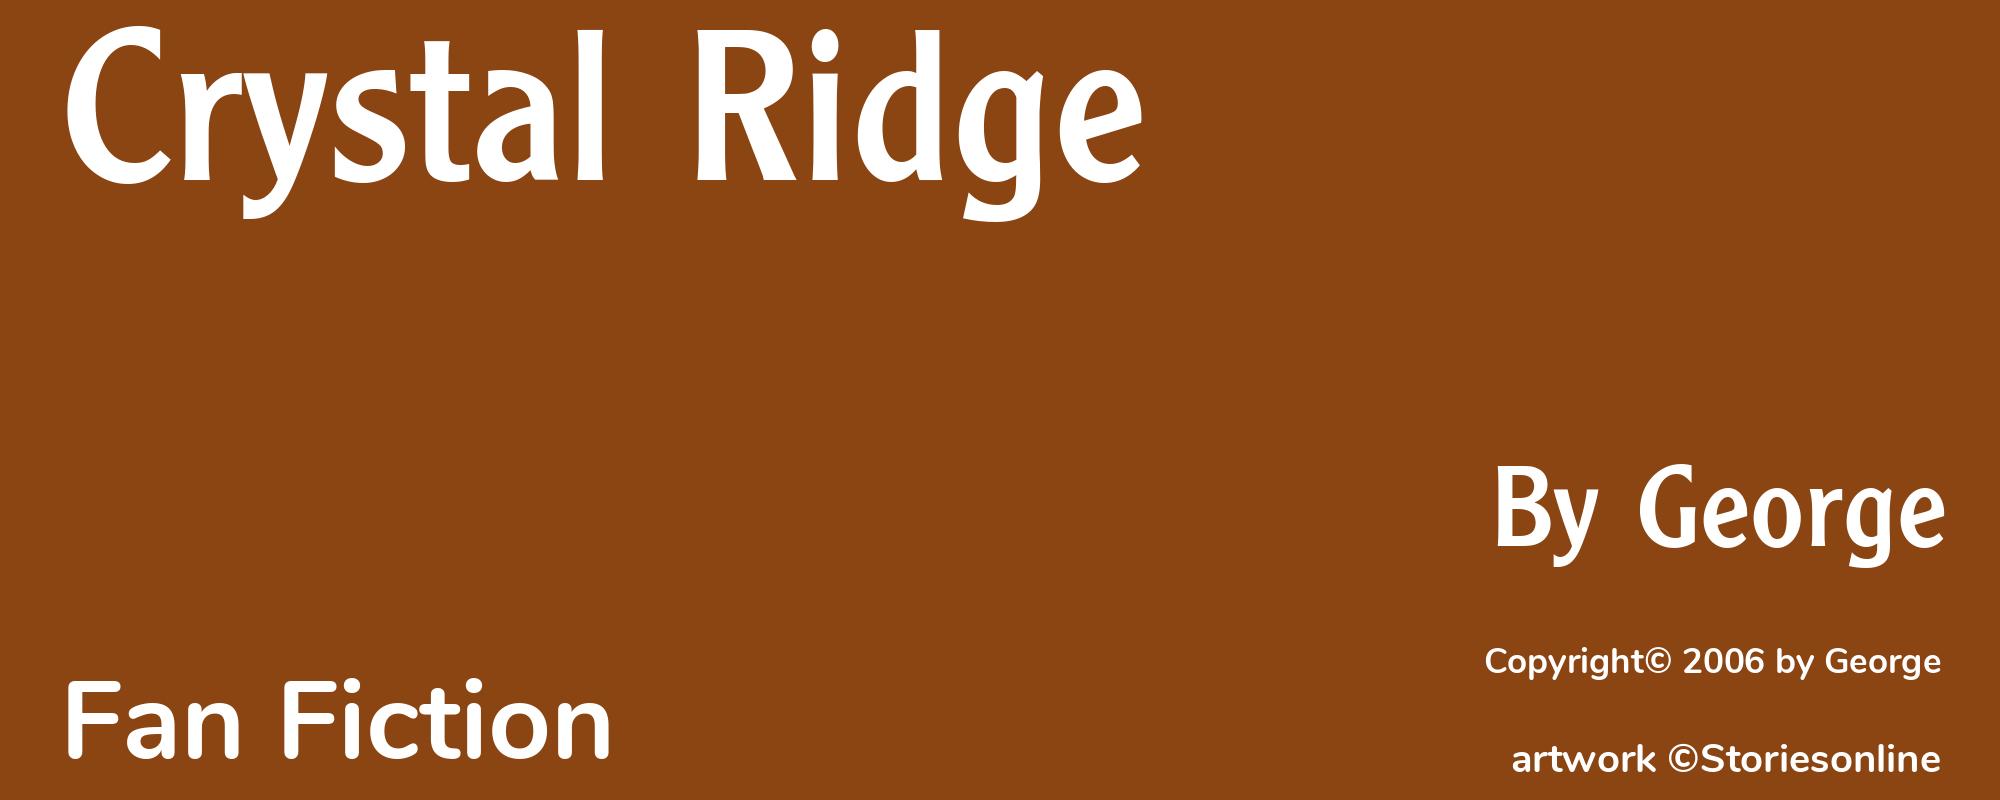 Crystal Ridge - Cover